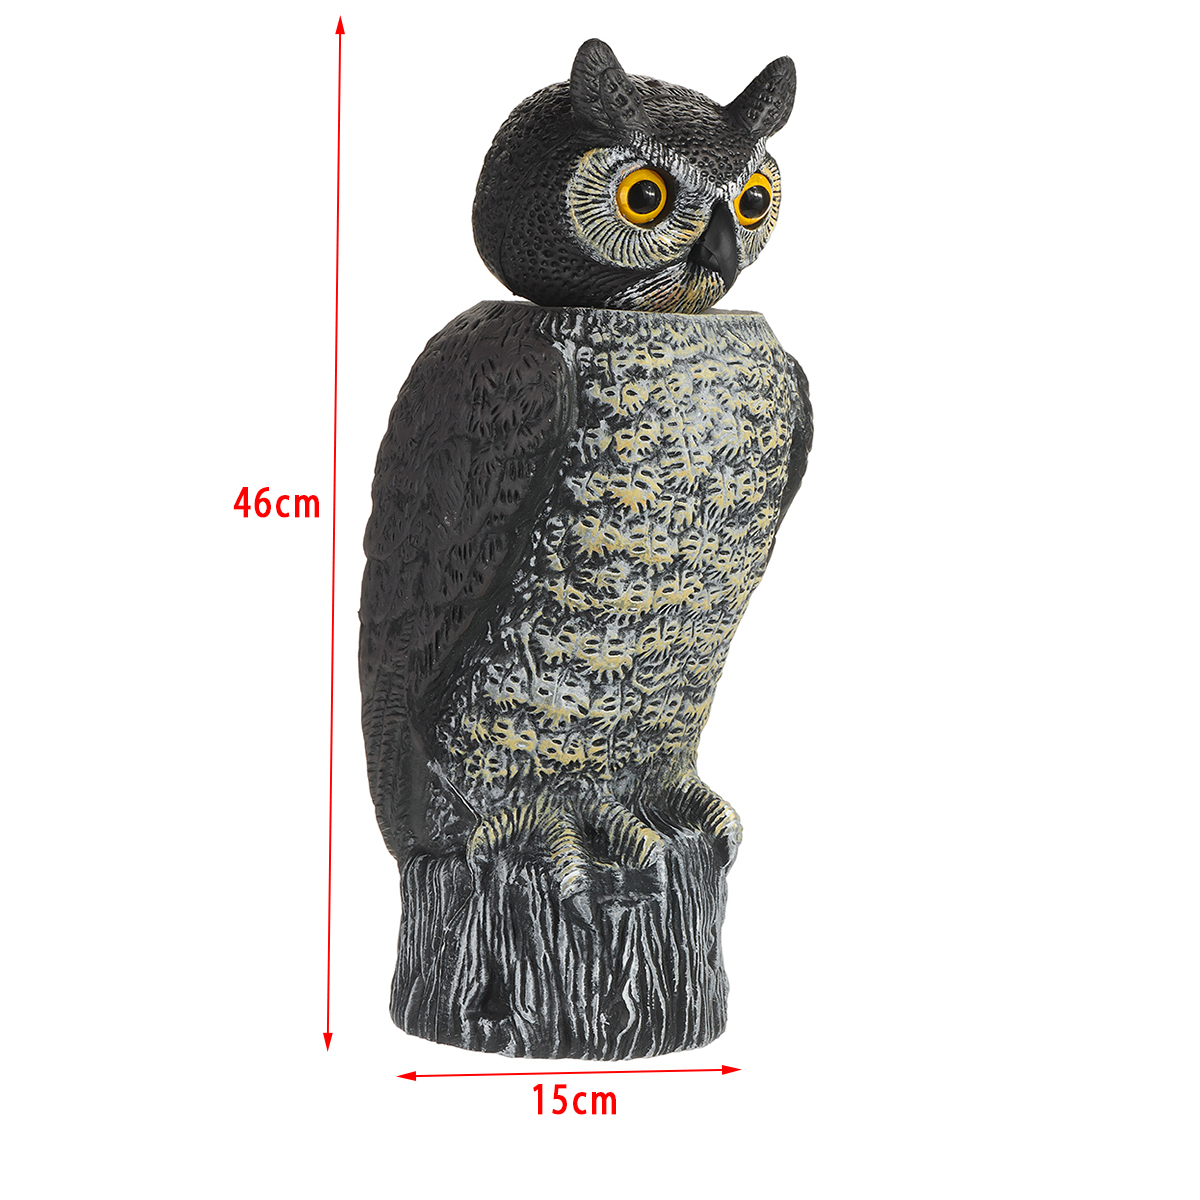 Rotating-Head-Owl-Decoy-Protection-Repellent-Bird-Pest-Control-Scarecrow-Garden-Yard-Decorations-1461479-4